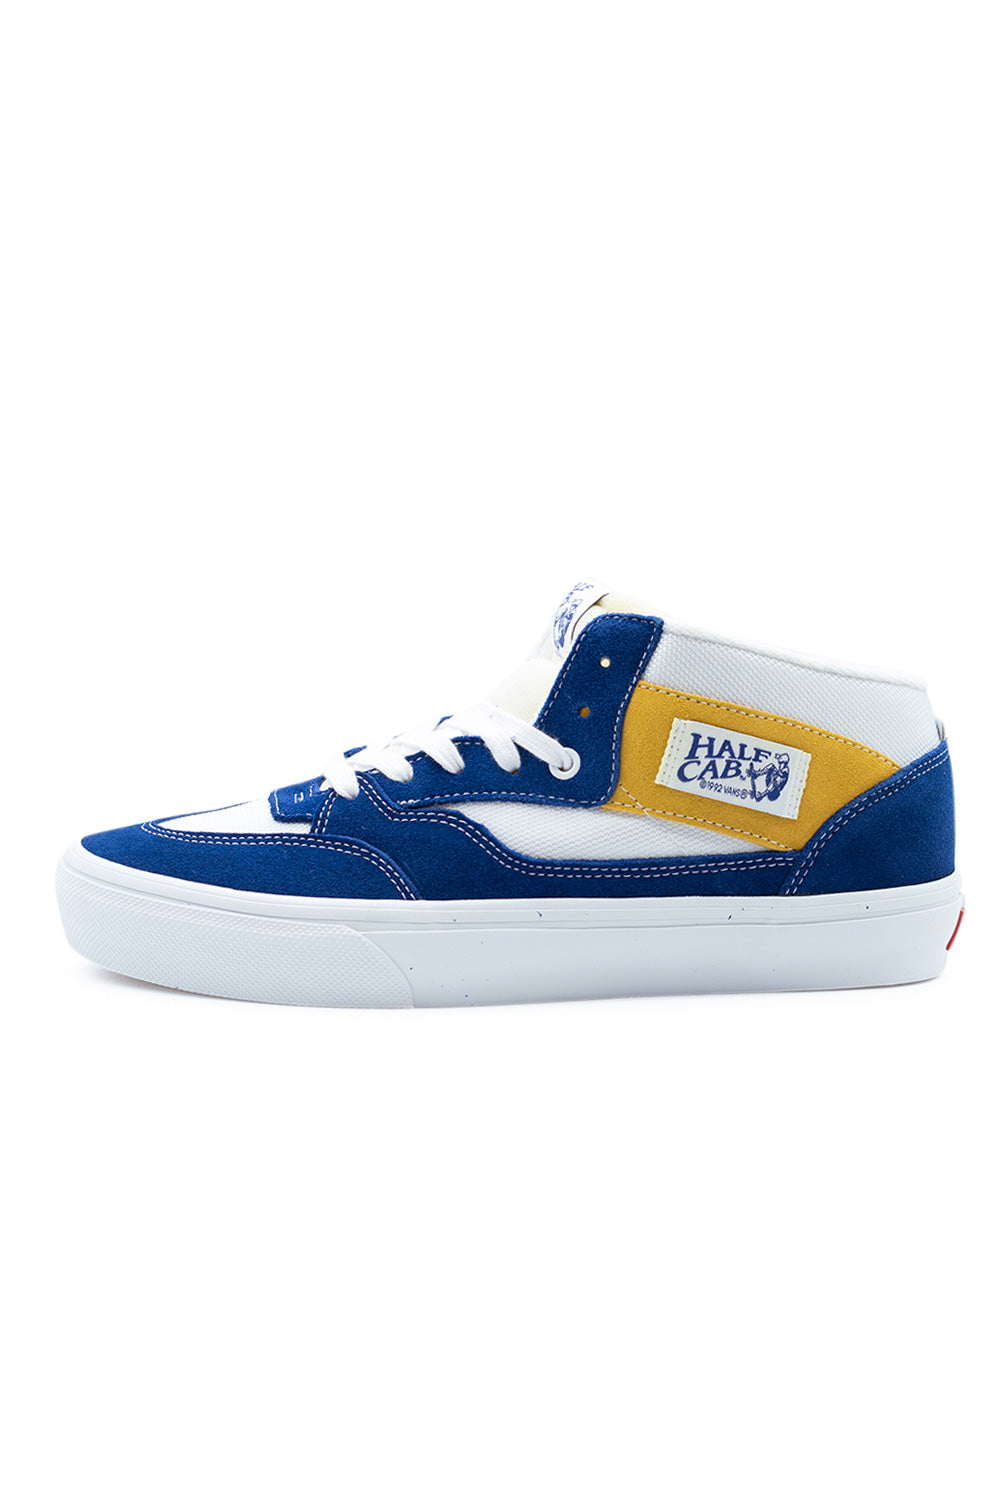 Vans Half Cab 92 (Skate) Shoe Athletic Blue / Yellow - BONKERS